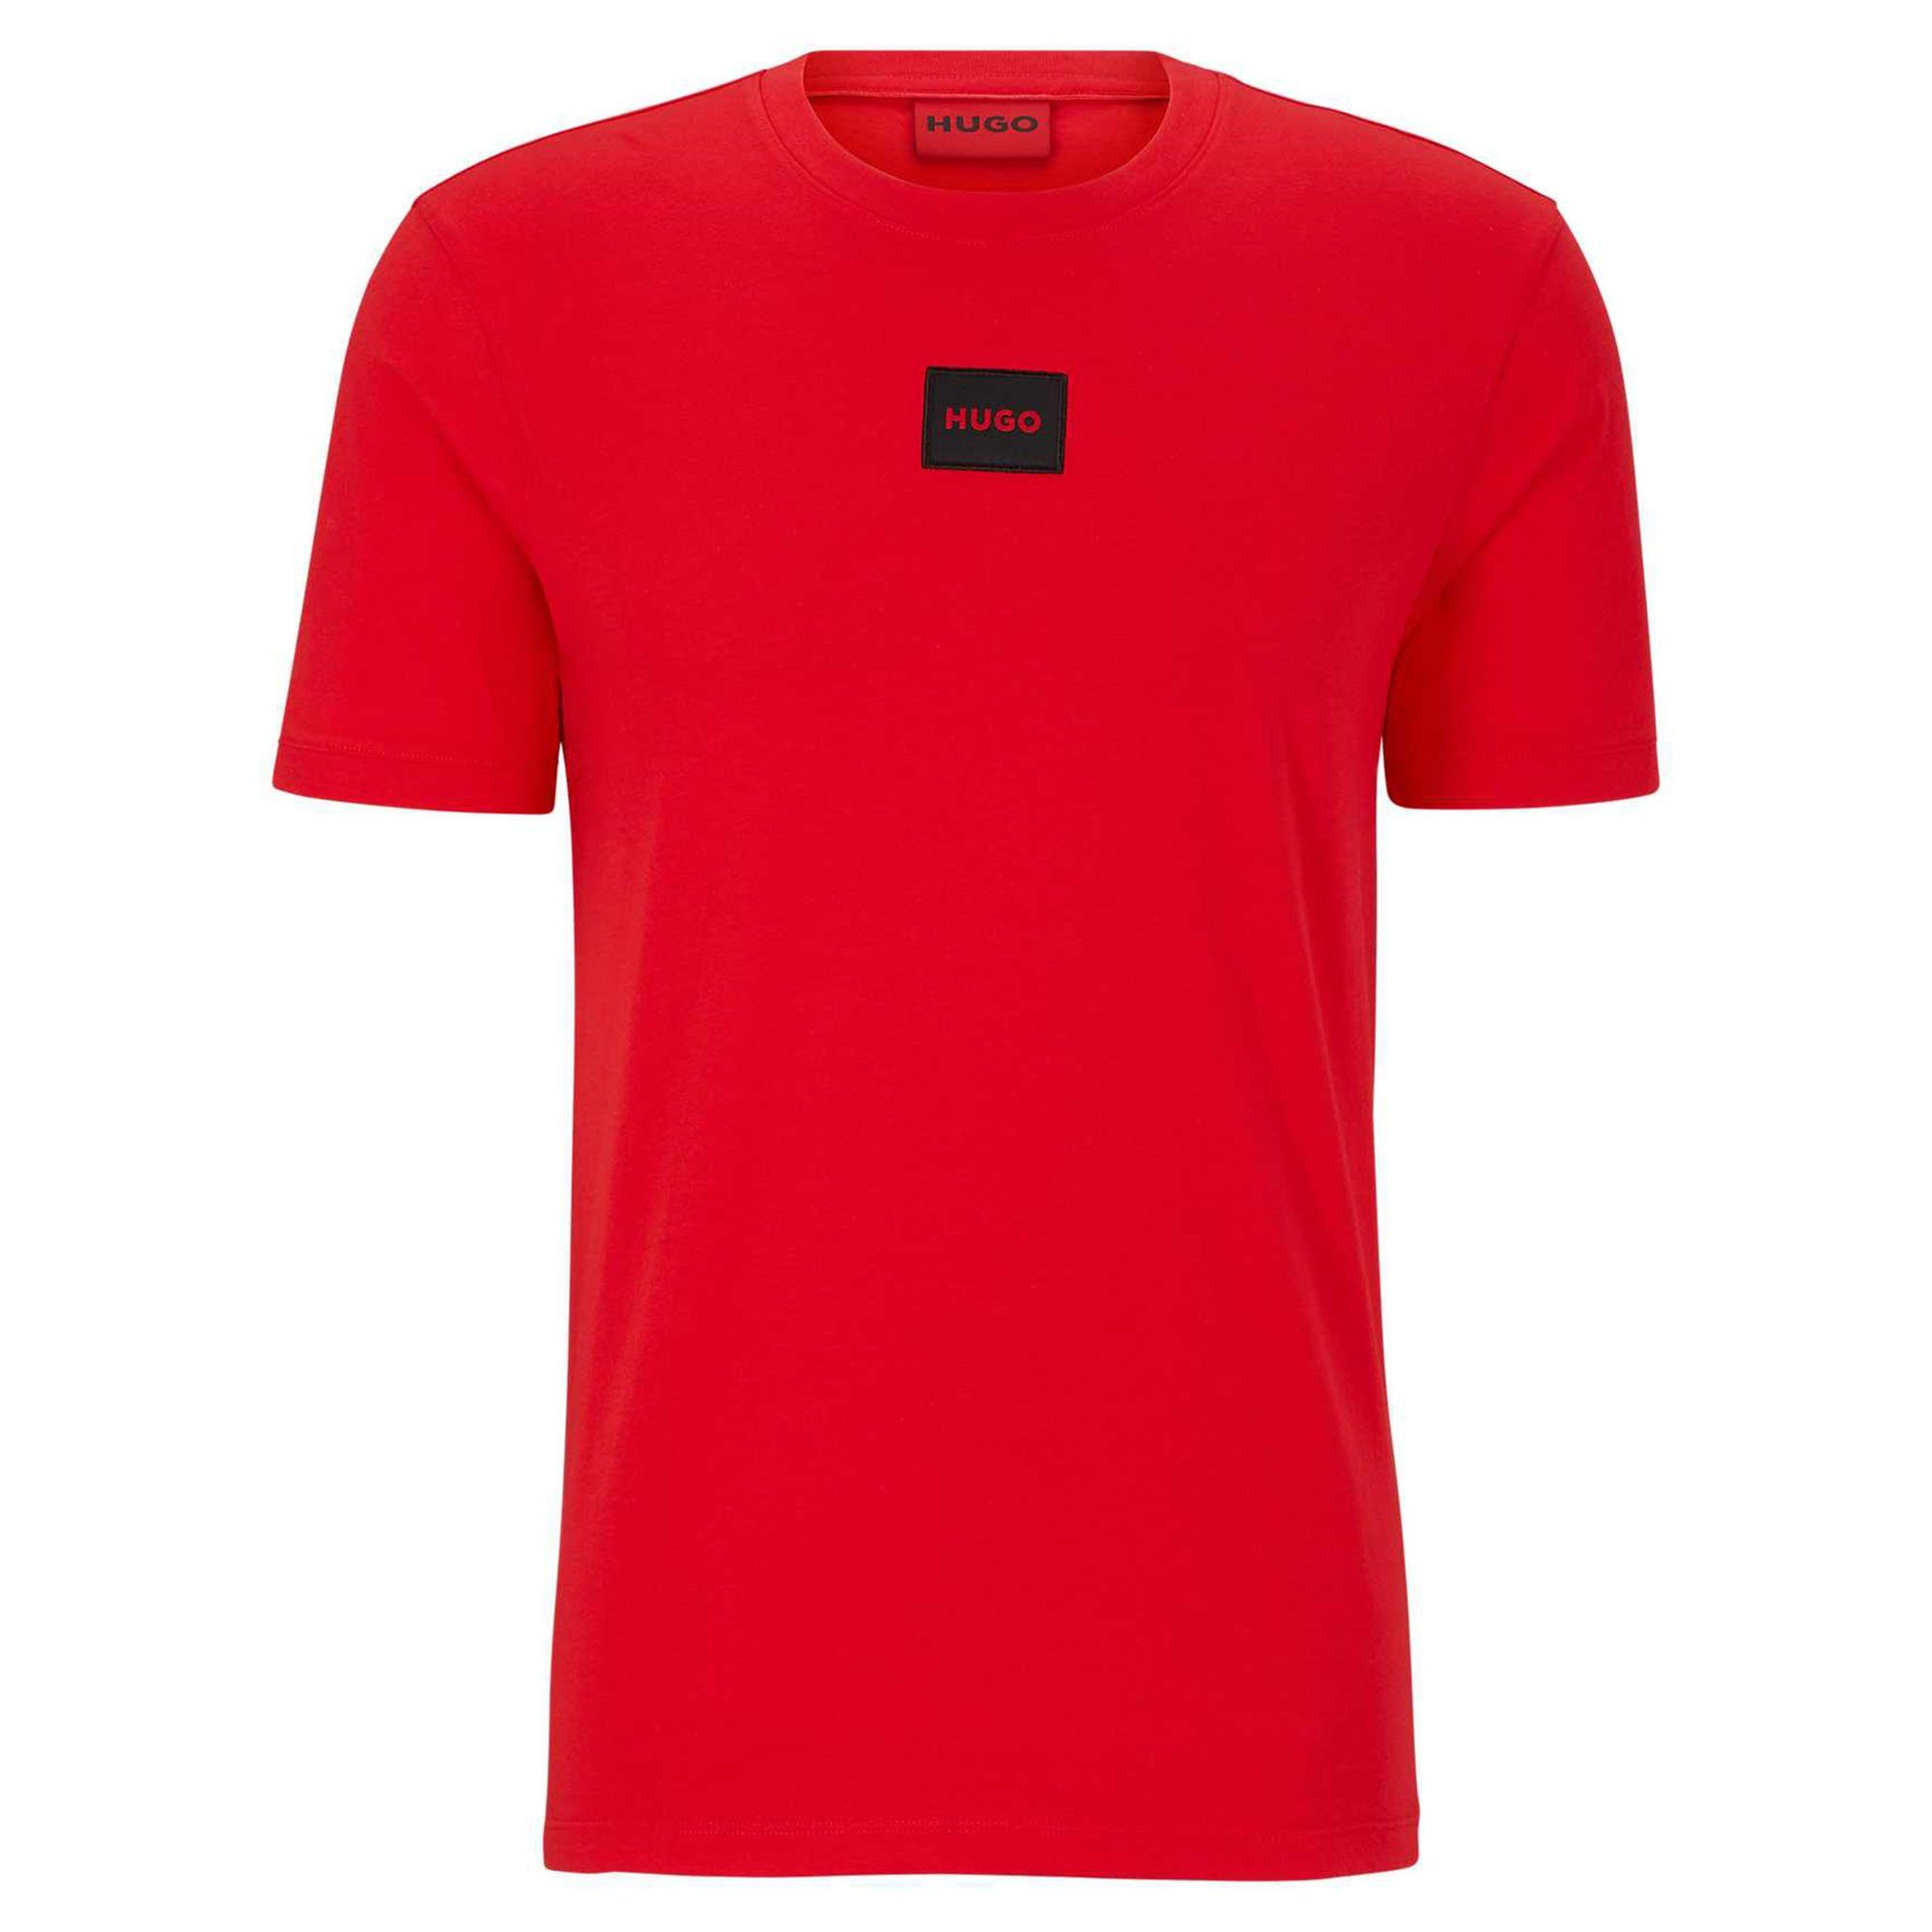 Rundhals Herren - HUGO Diragolino212 Pink) Rot (Open T-Shirt T-Shirt